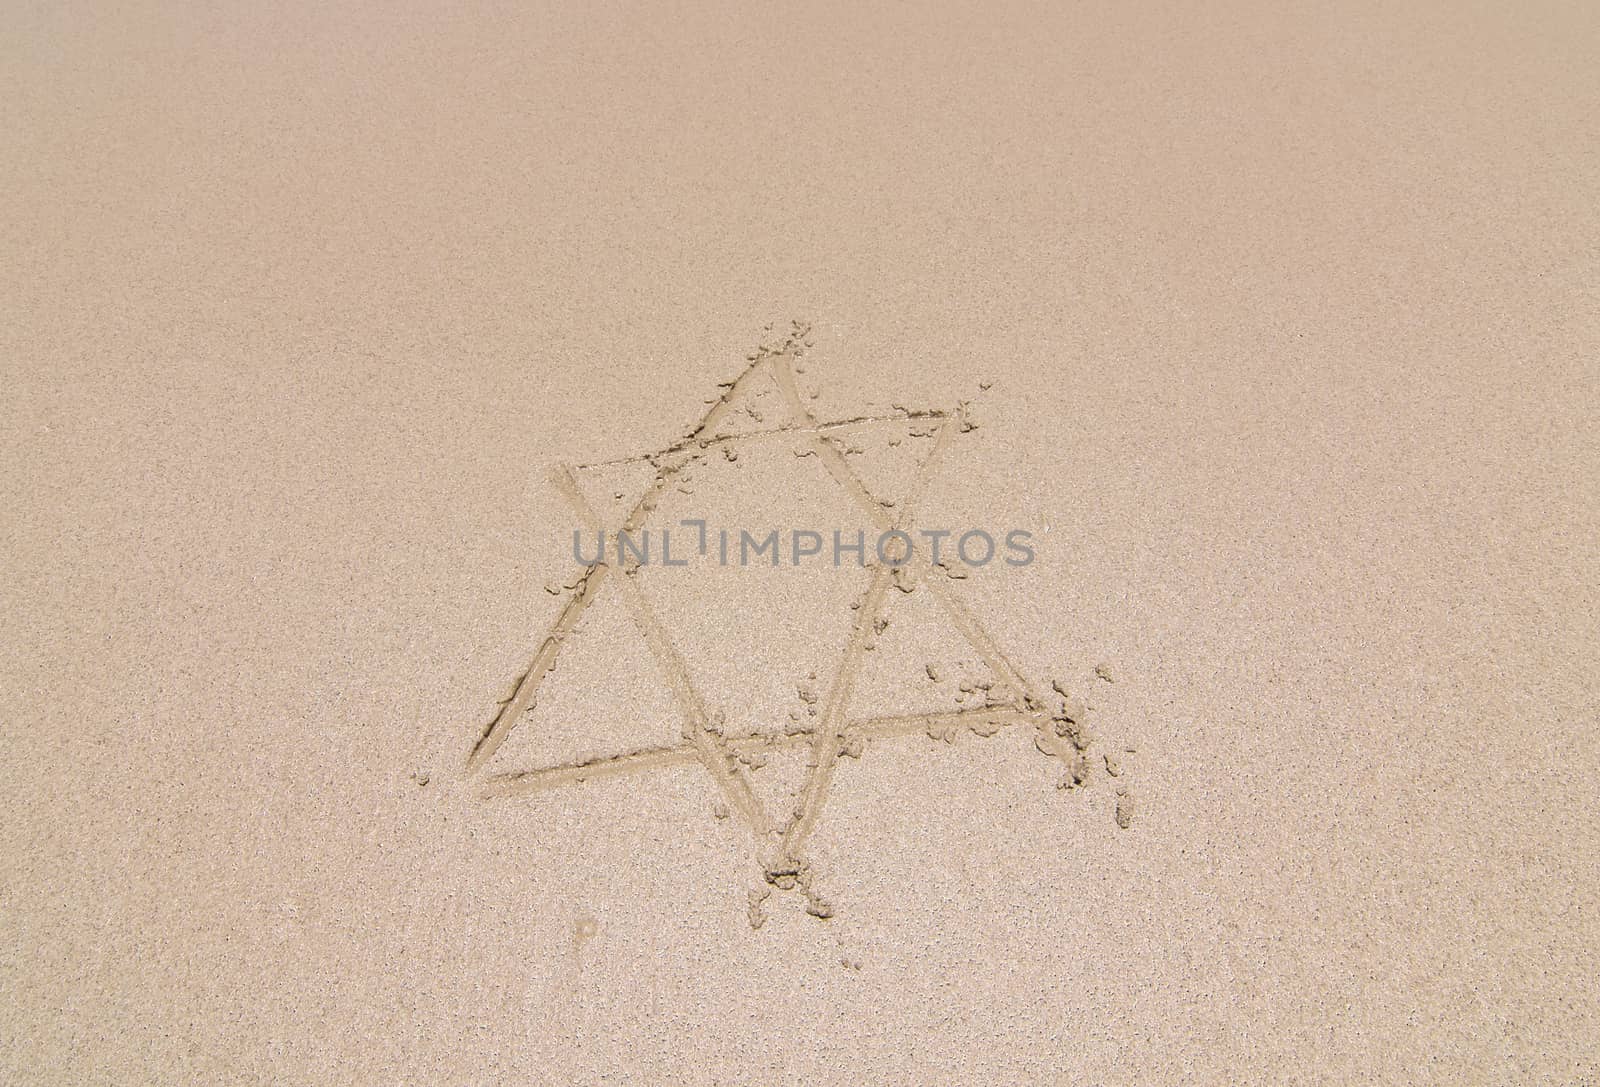 Draw a star on the sand by Sorapop